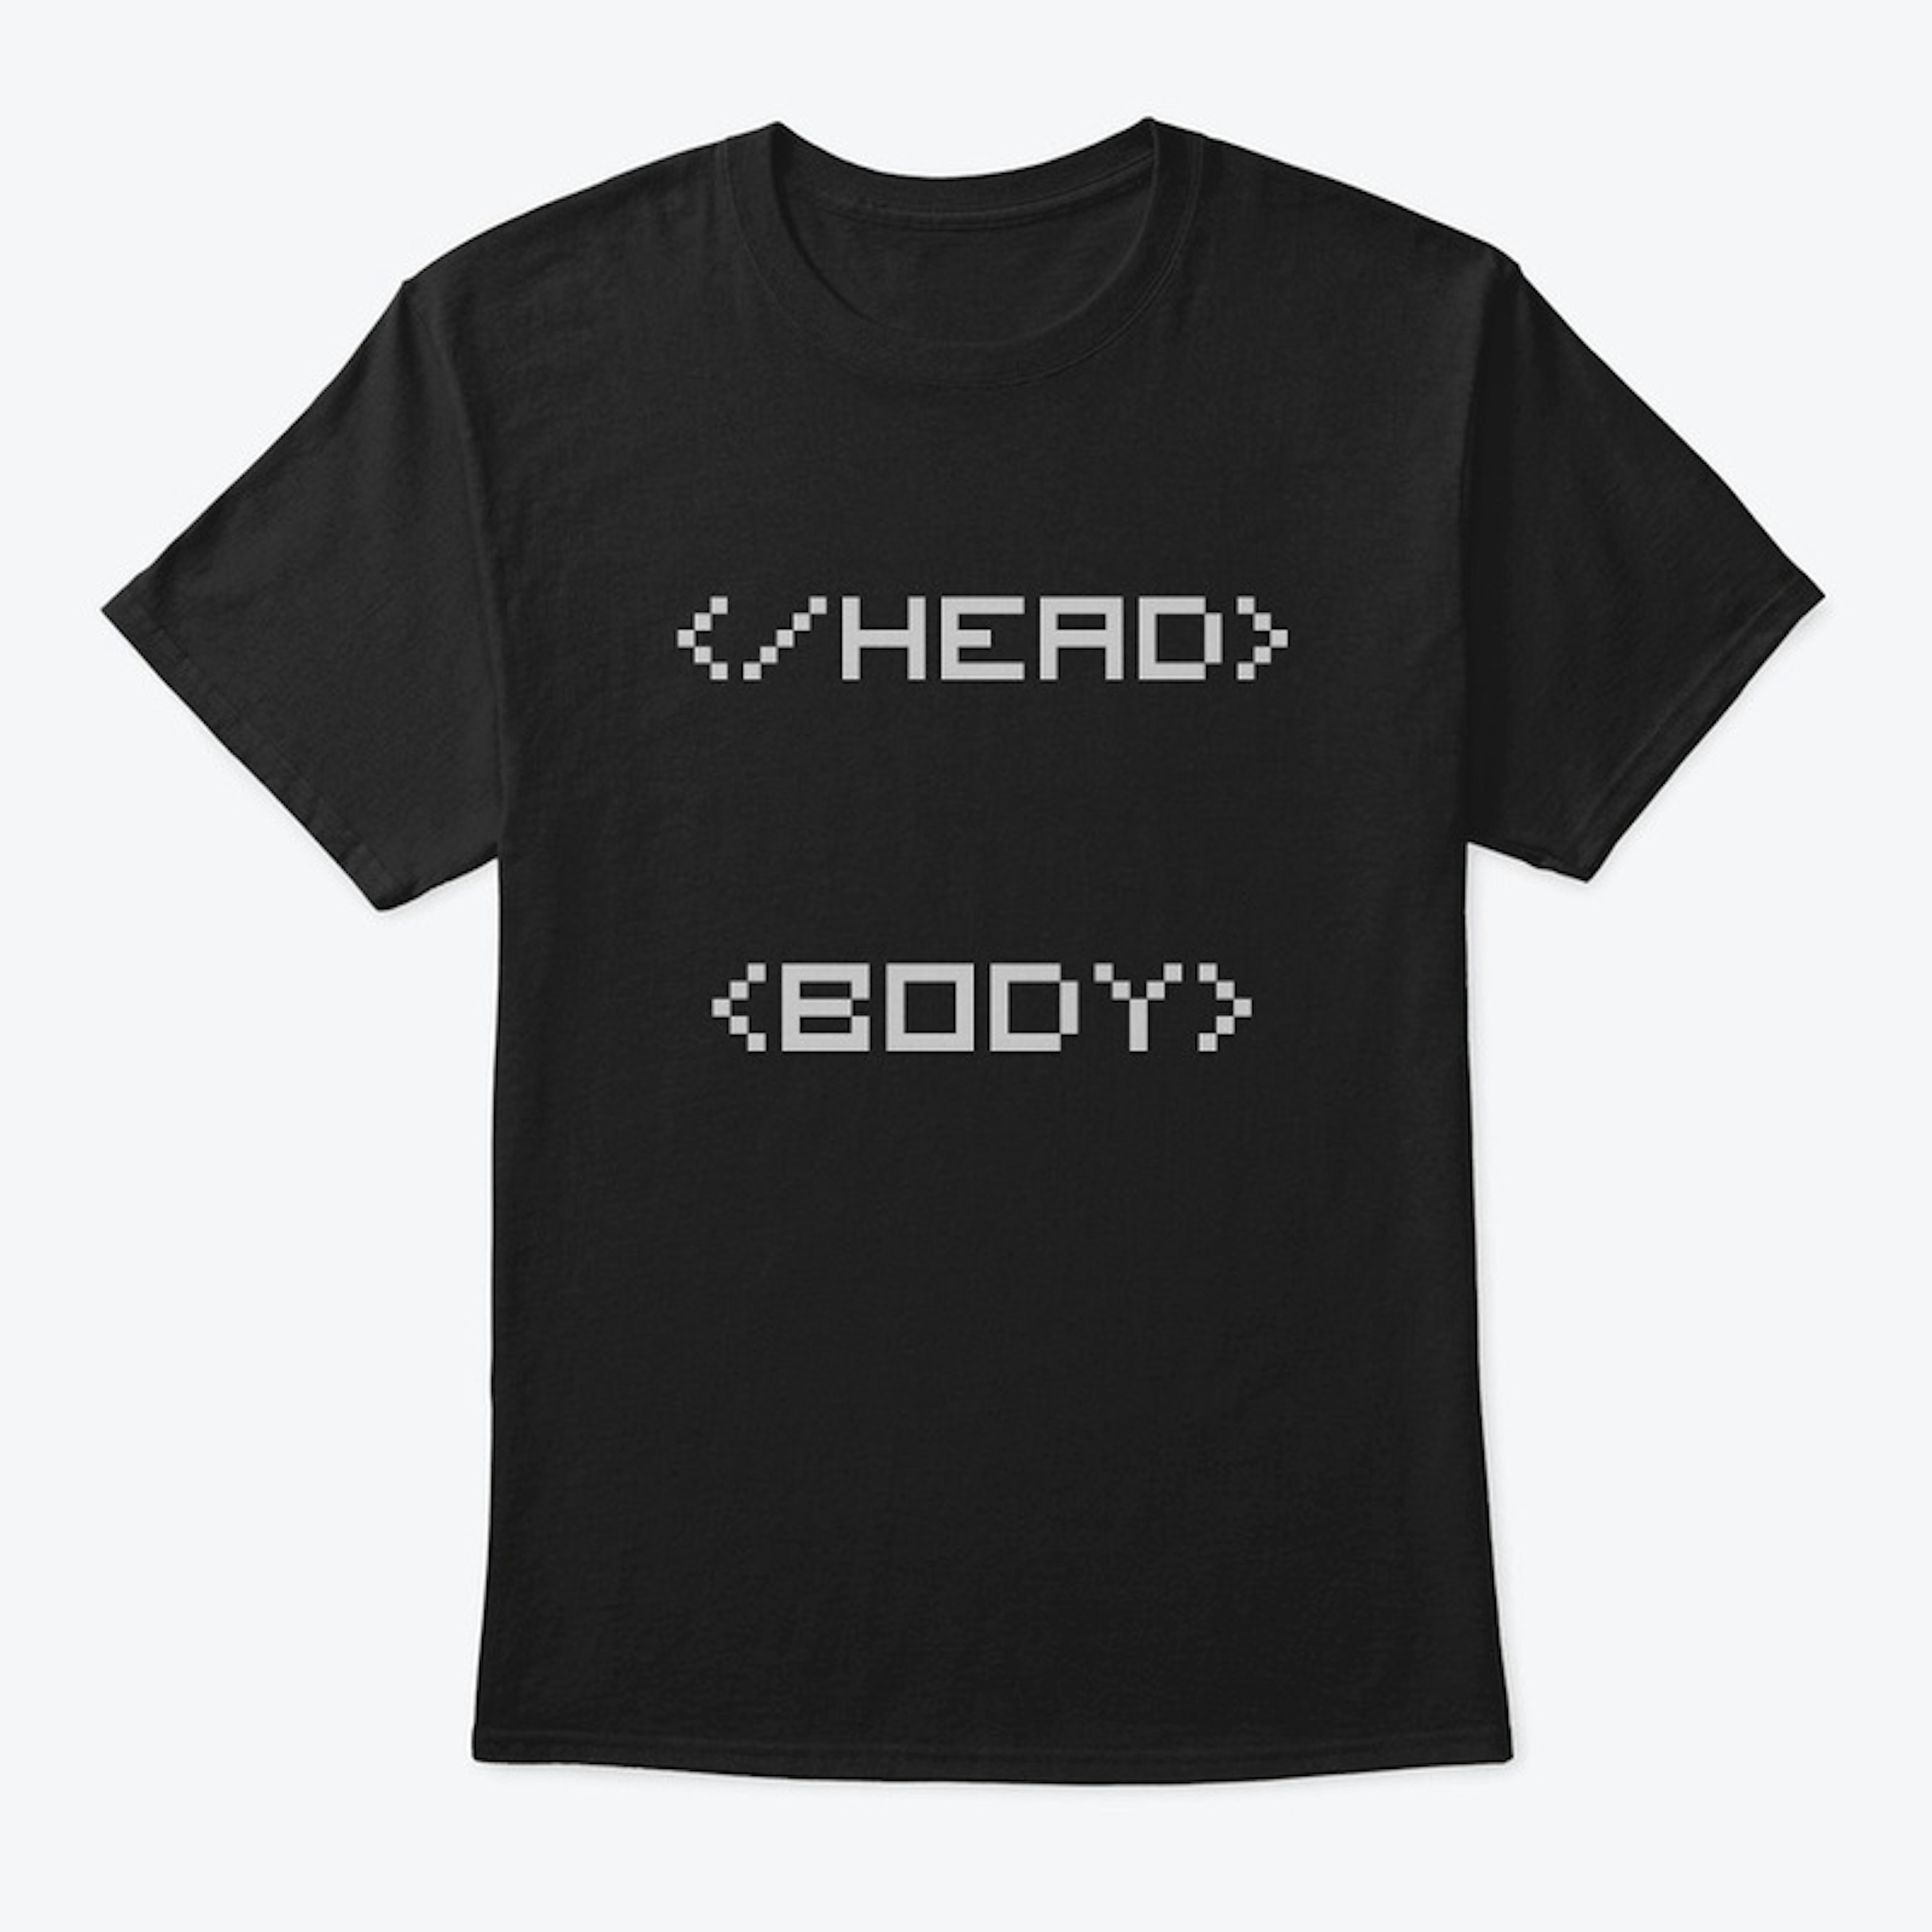 Developer head/body